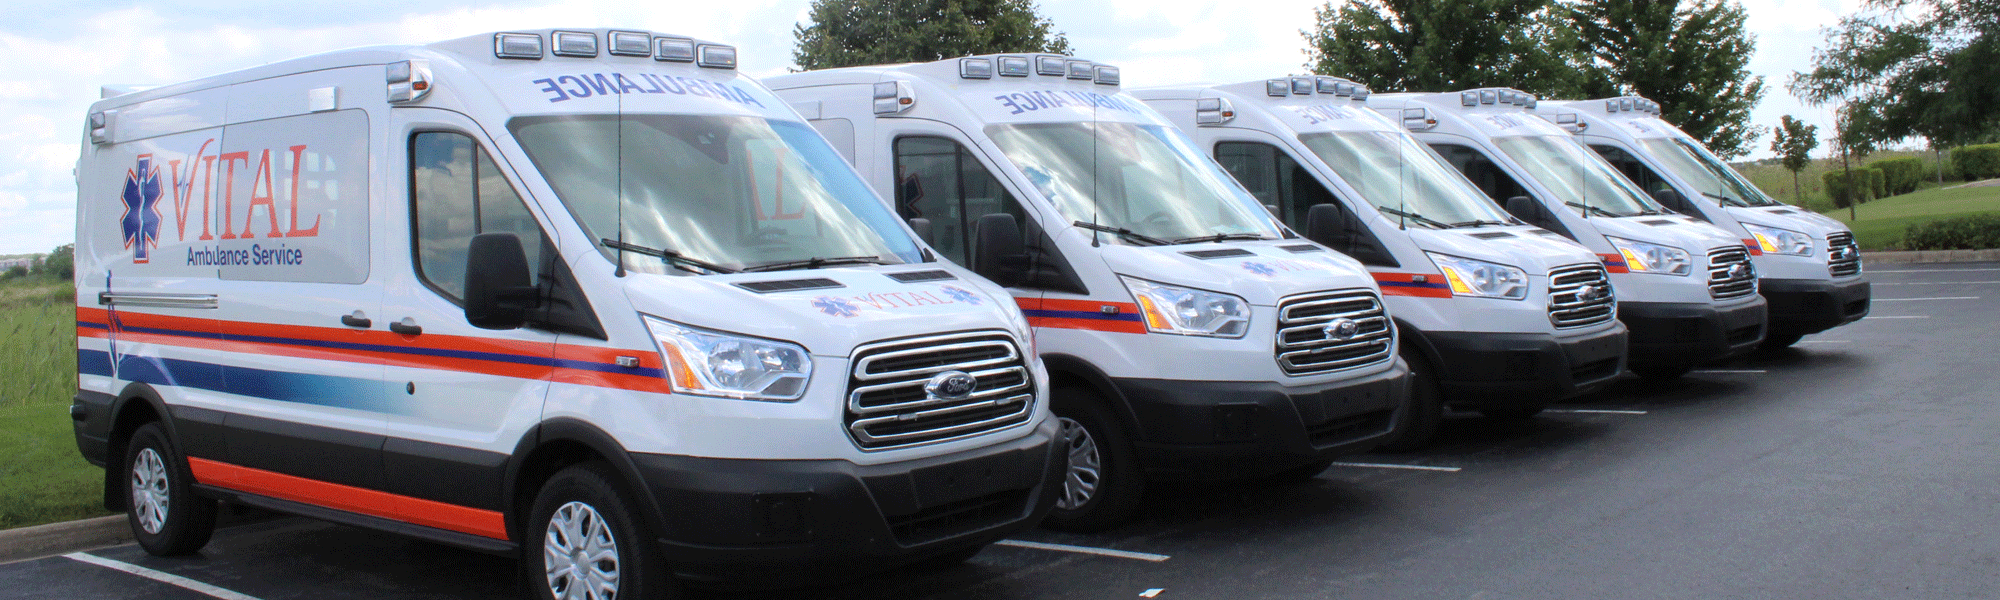 Vital Ambulance vehicles ready to transport